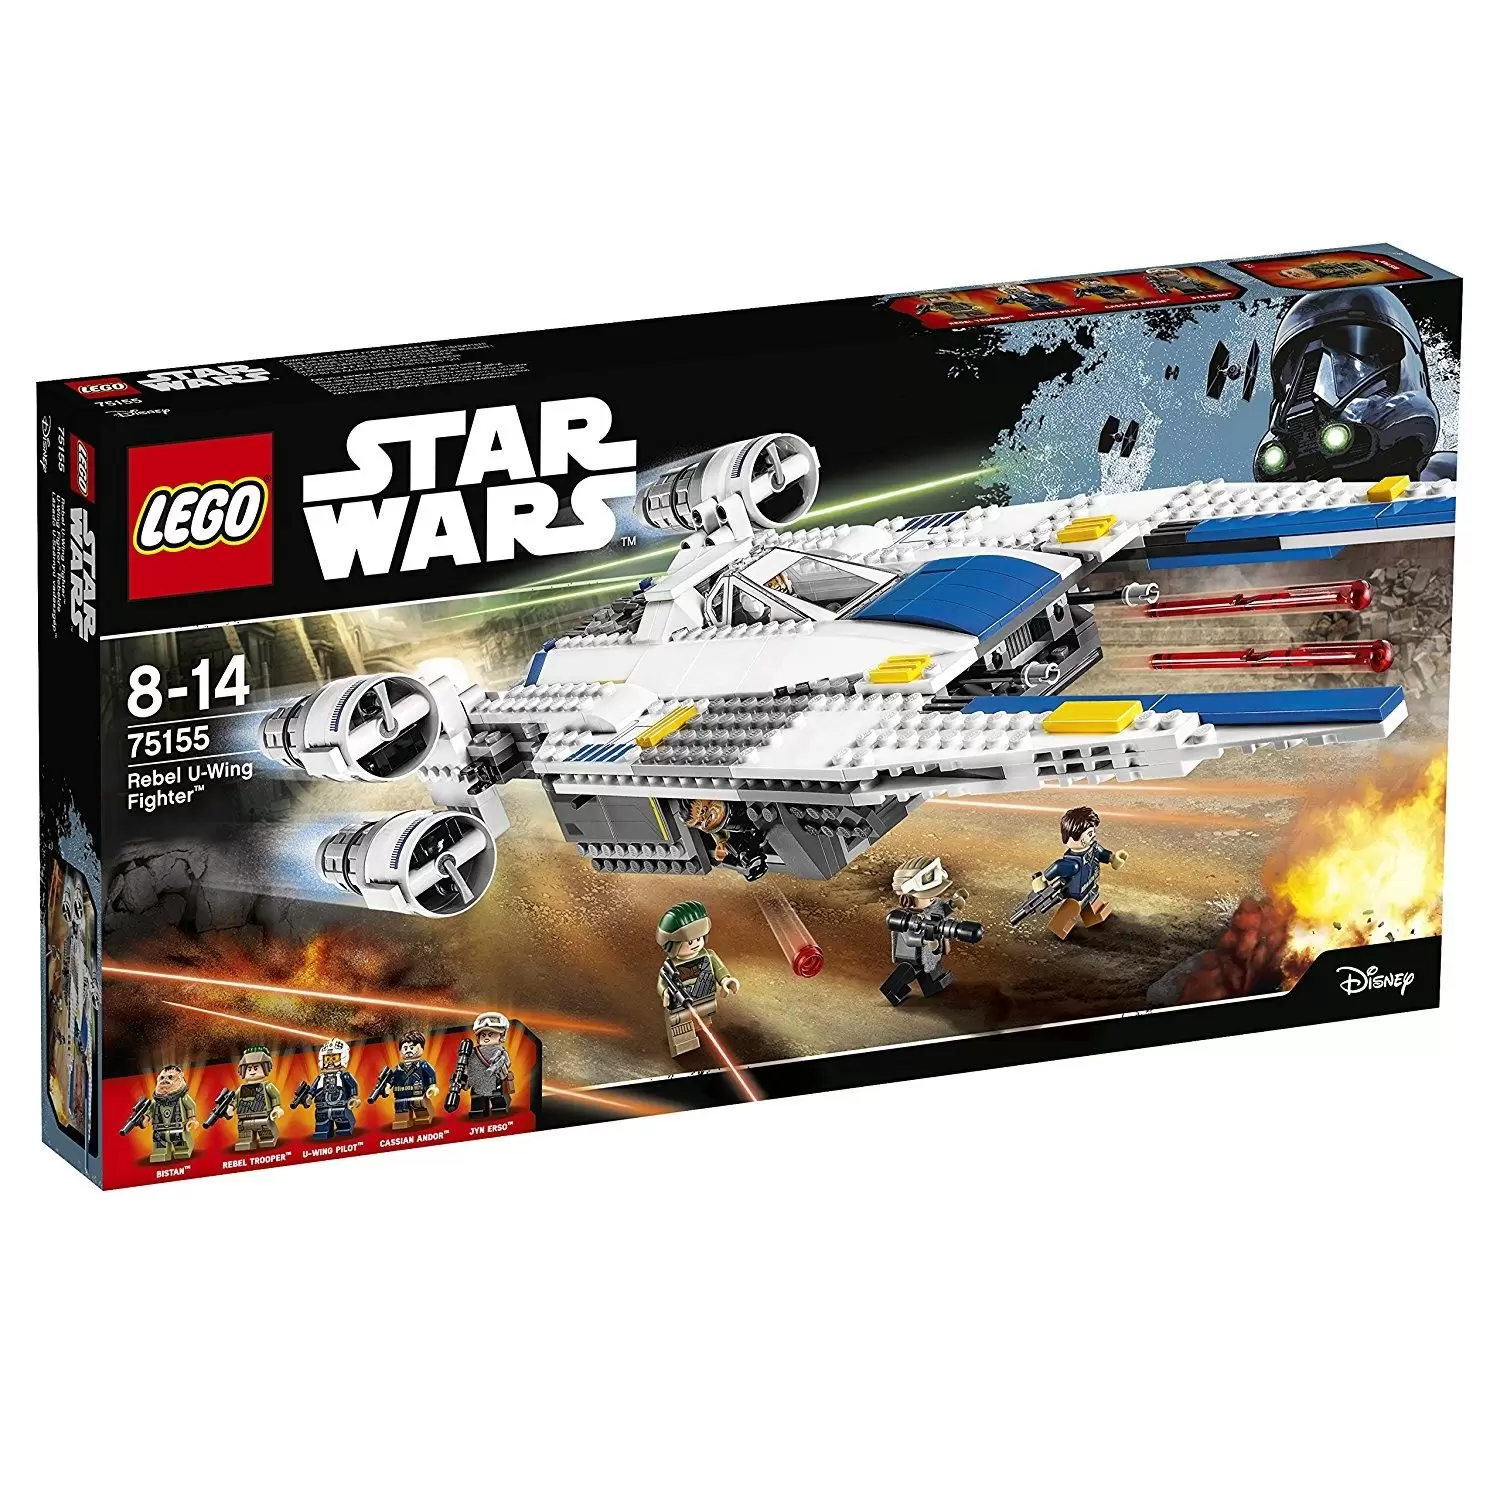 LEGO Star Wars - Rebel U-Wing Fighter